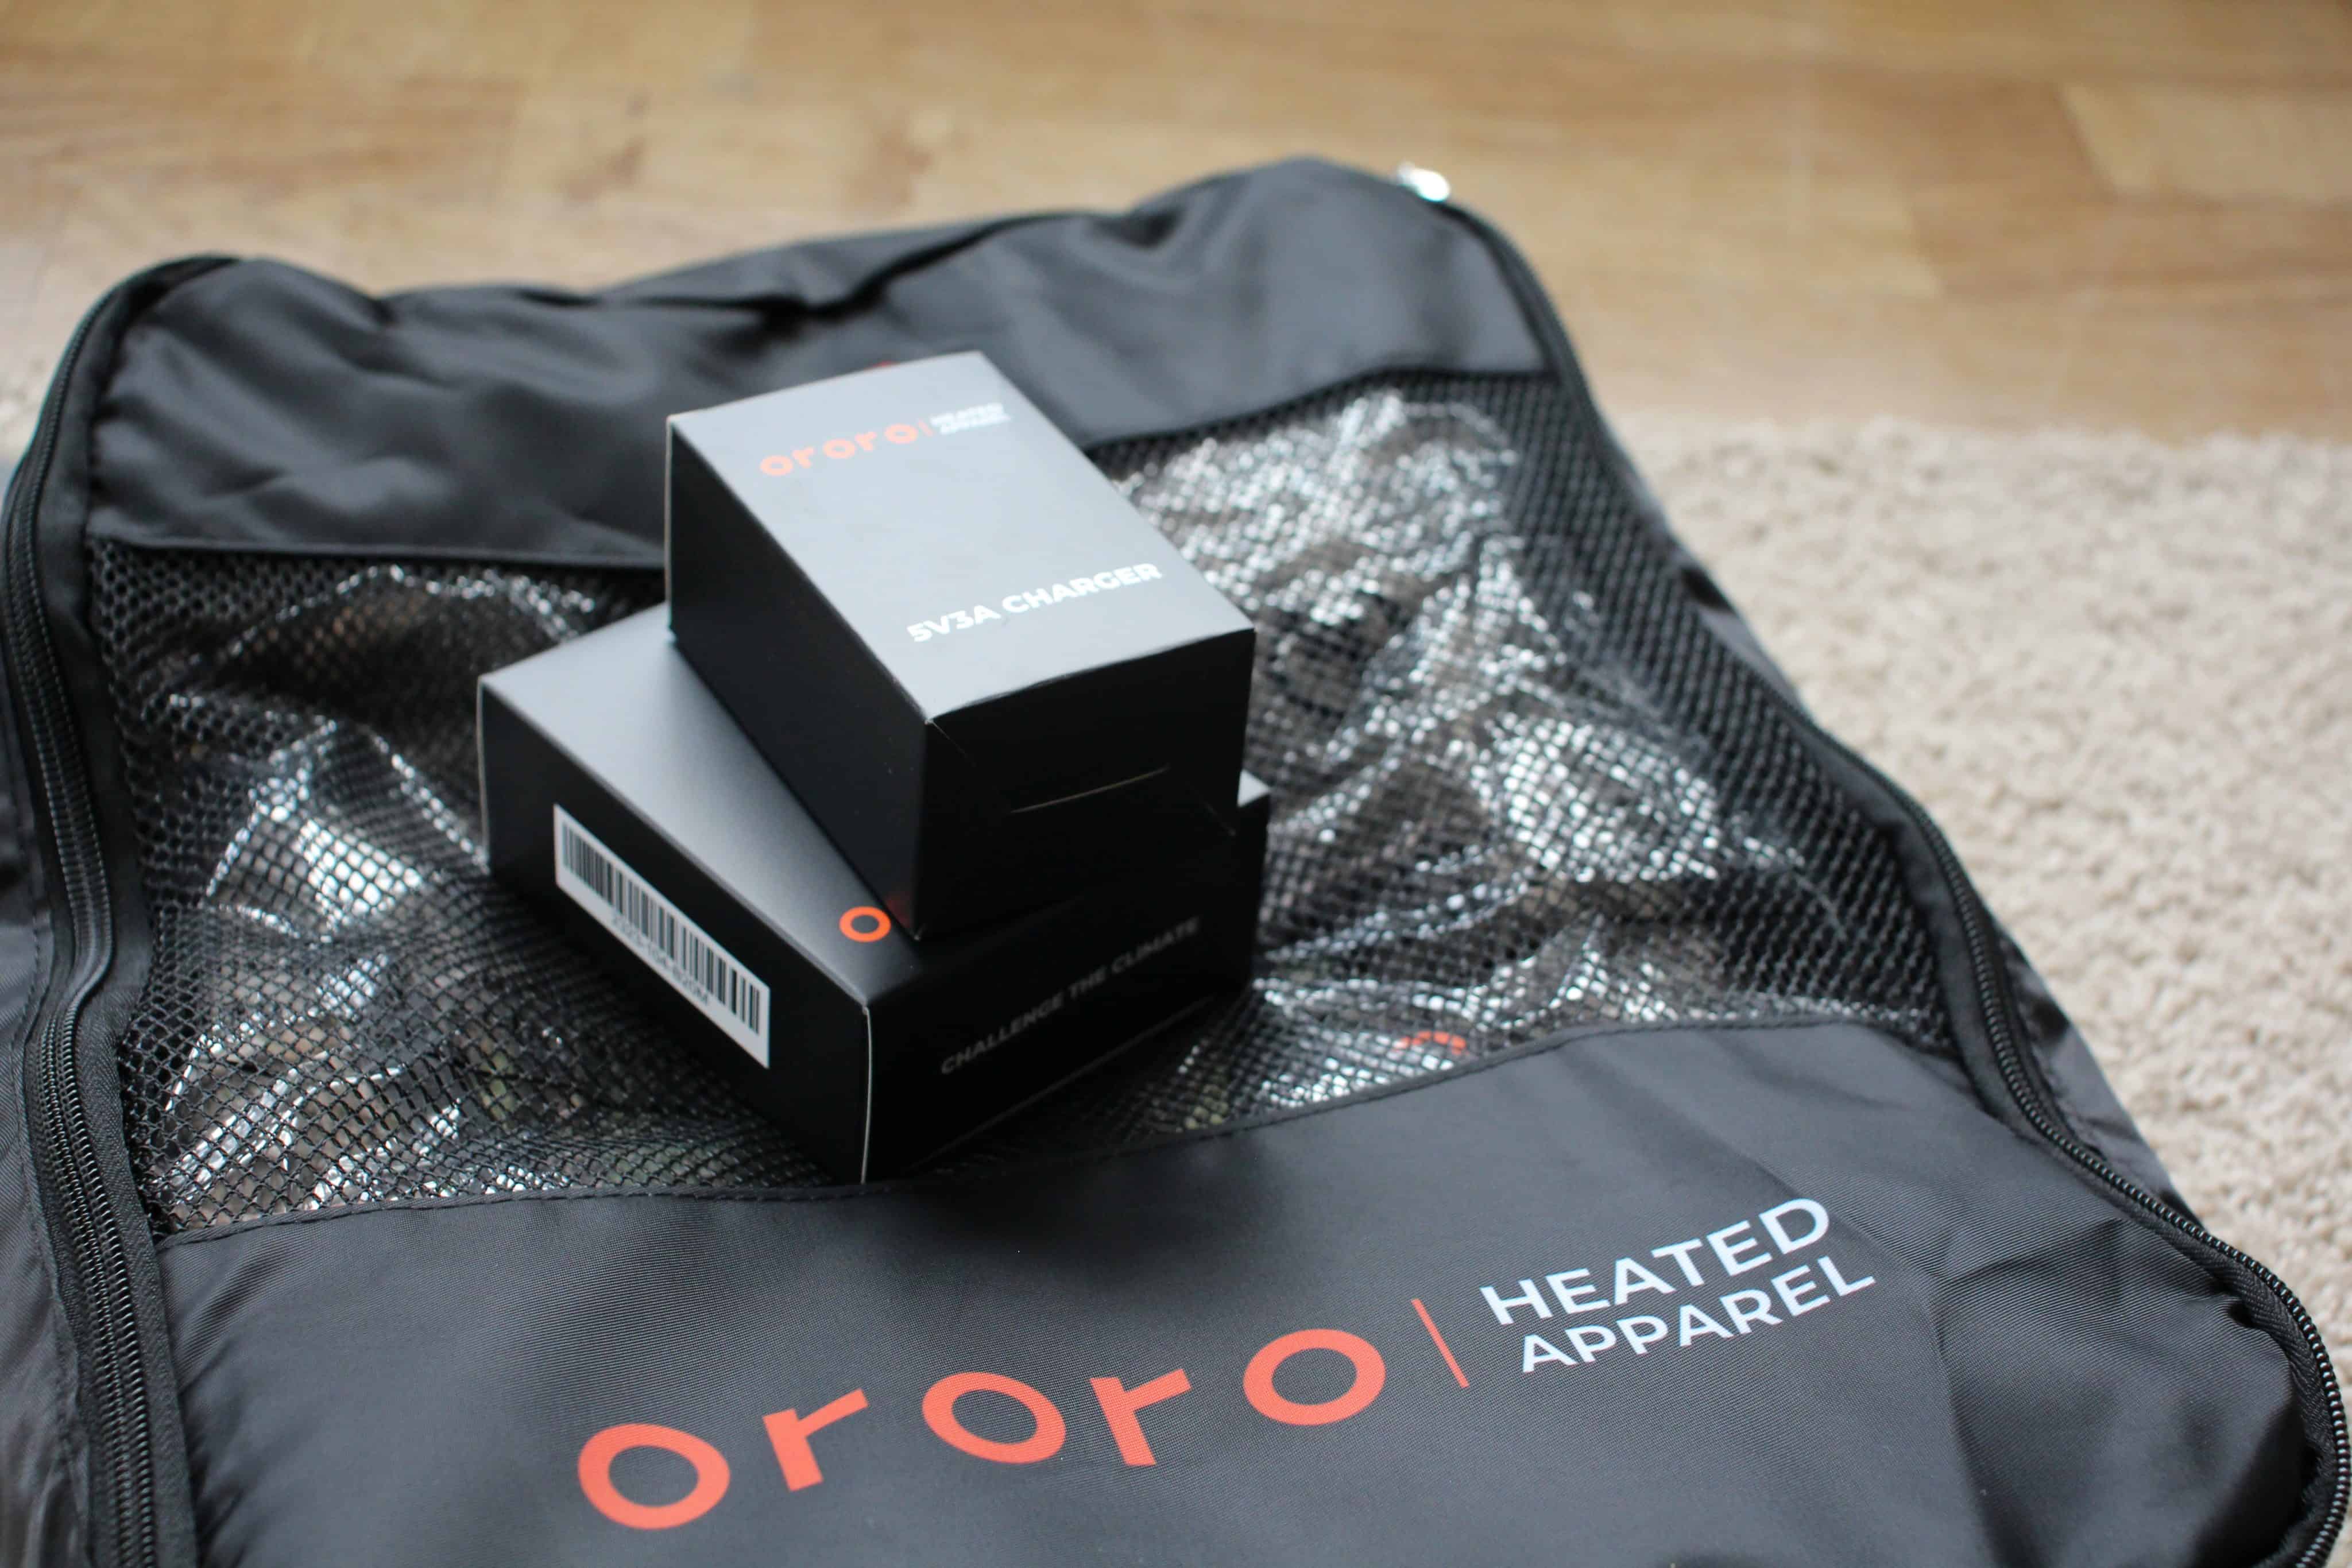 ororo heated apparel bag 2